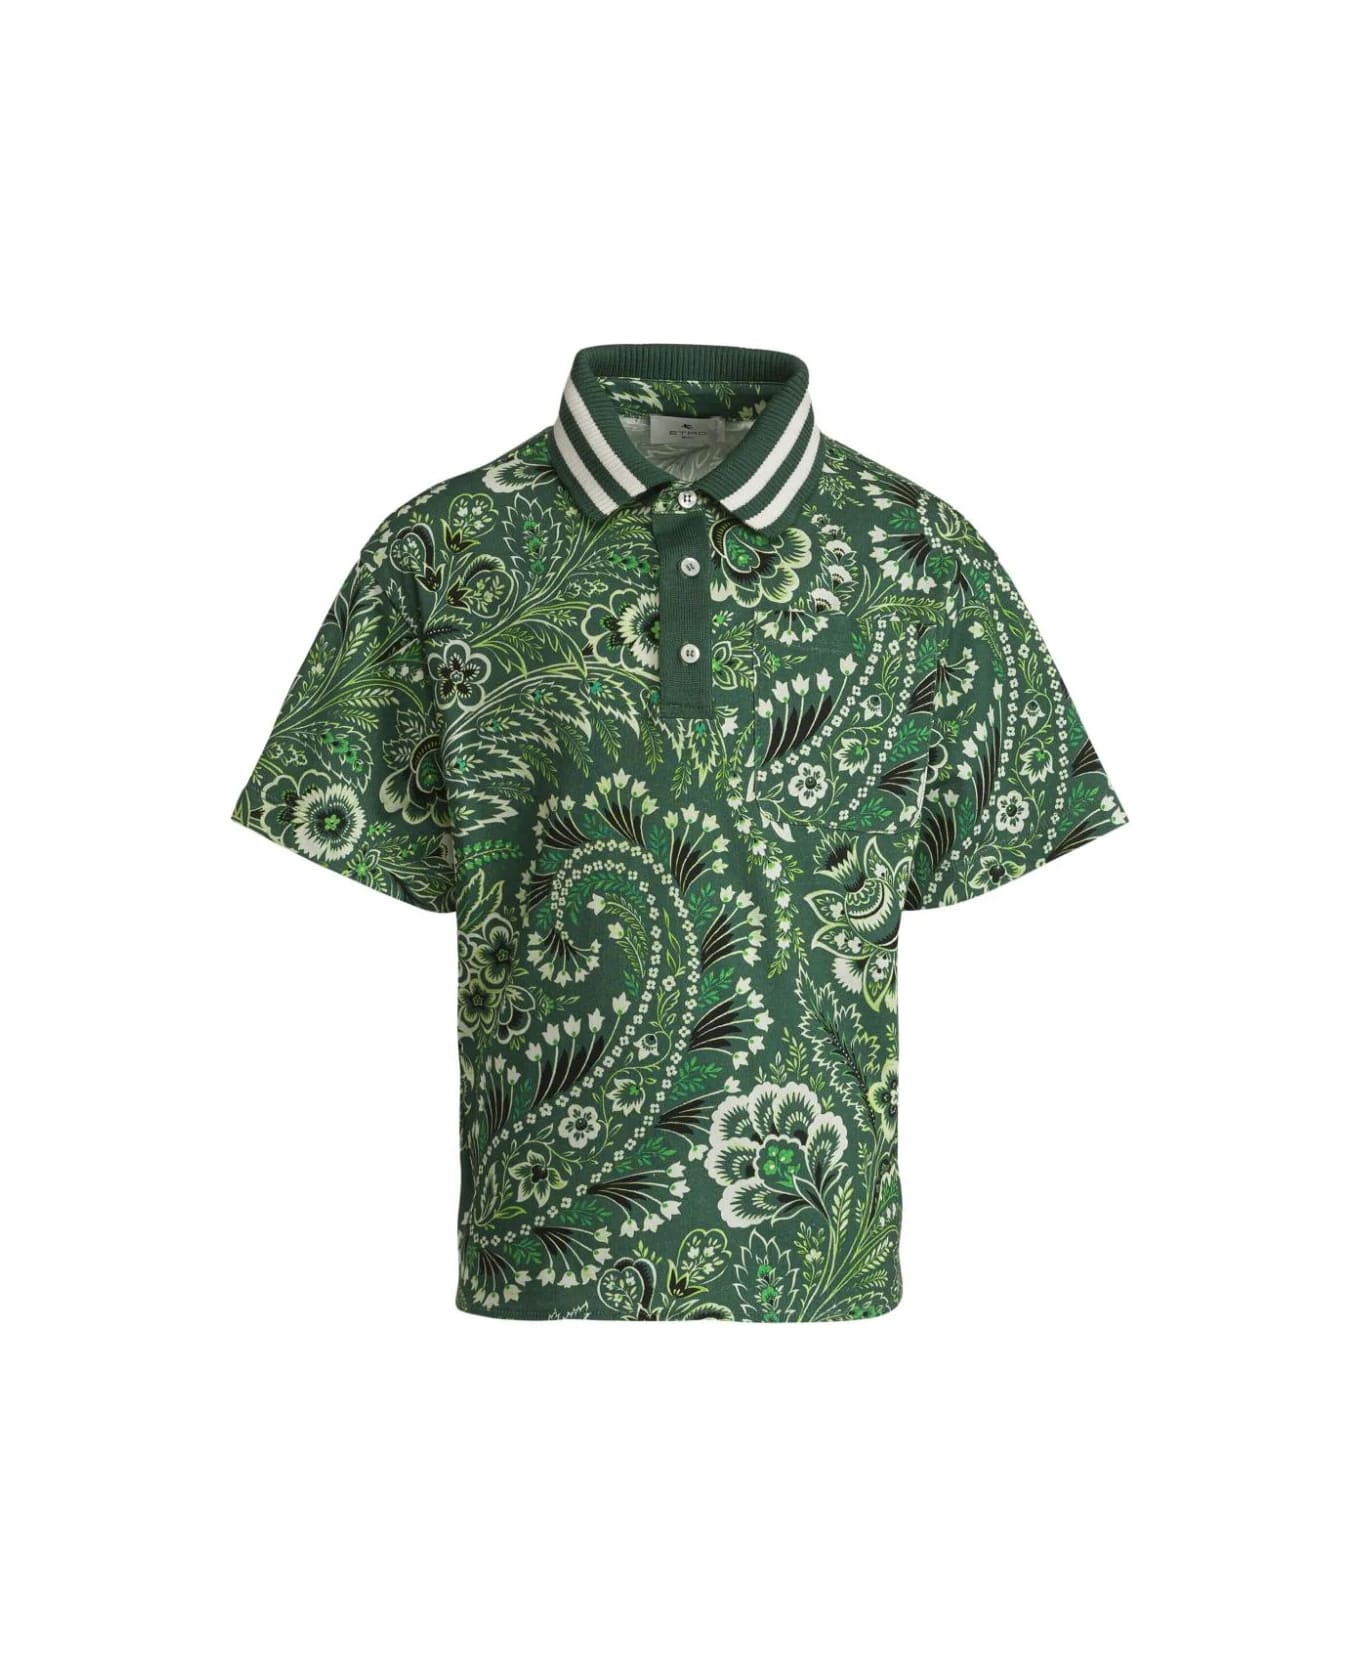 Etro Green Polo Shirt With Paisley Print - Green